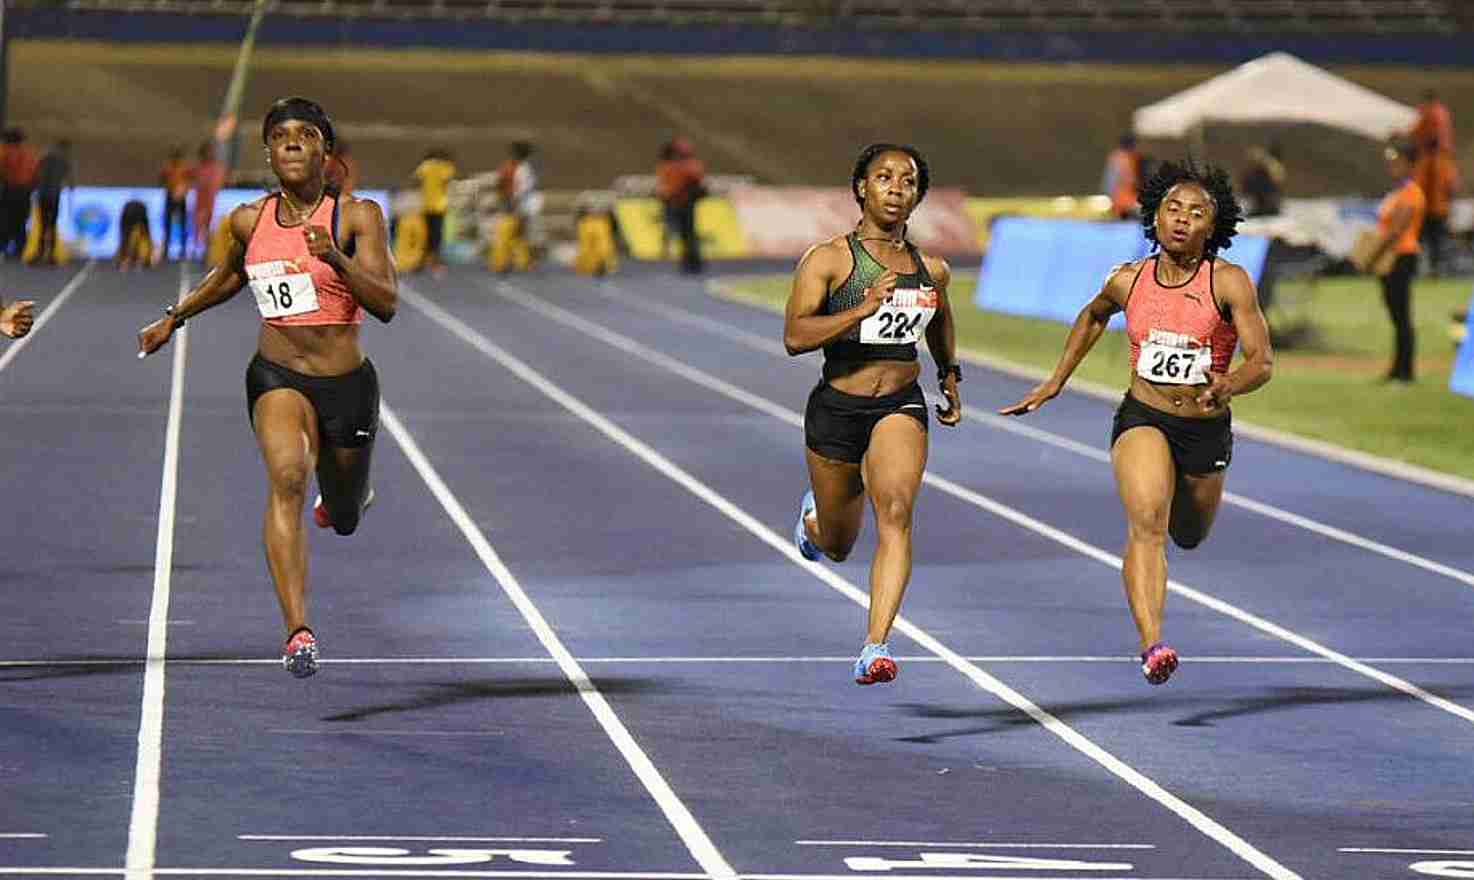 Fraser-Pryce v Thompson-Herah highlights 100m semi-finals at Jamaica trials